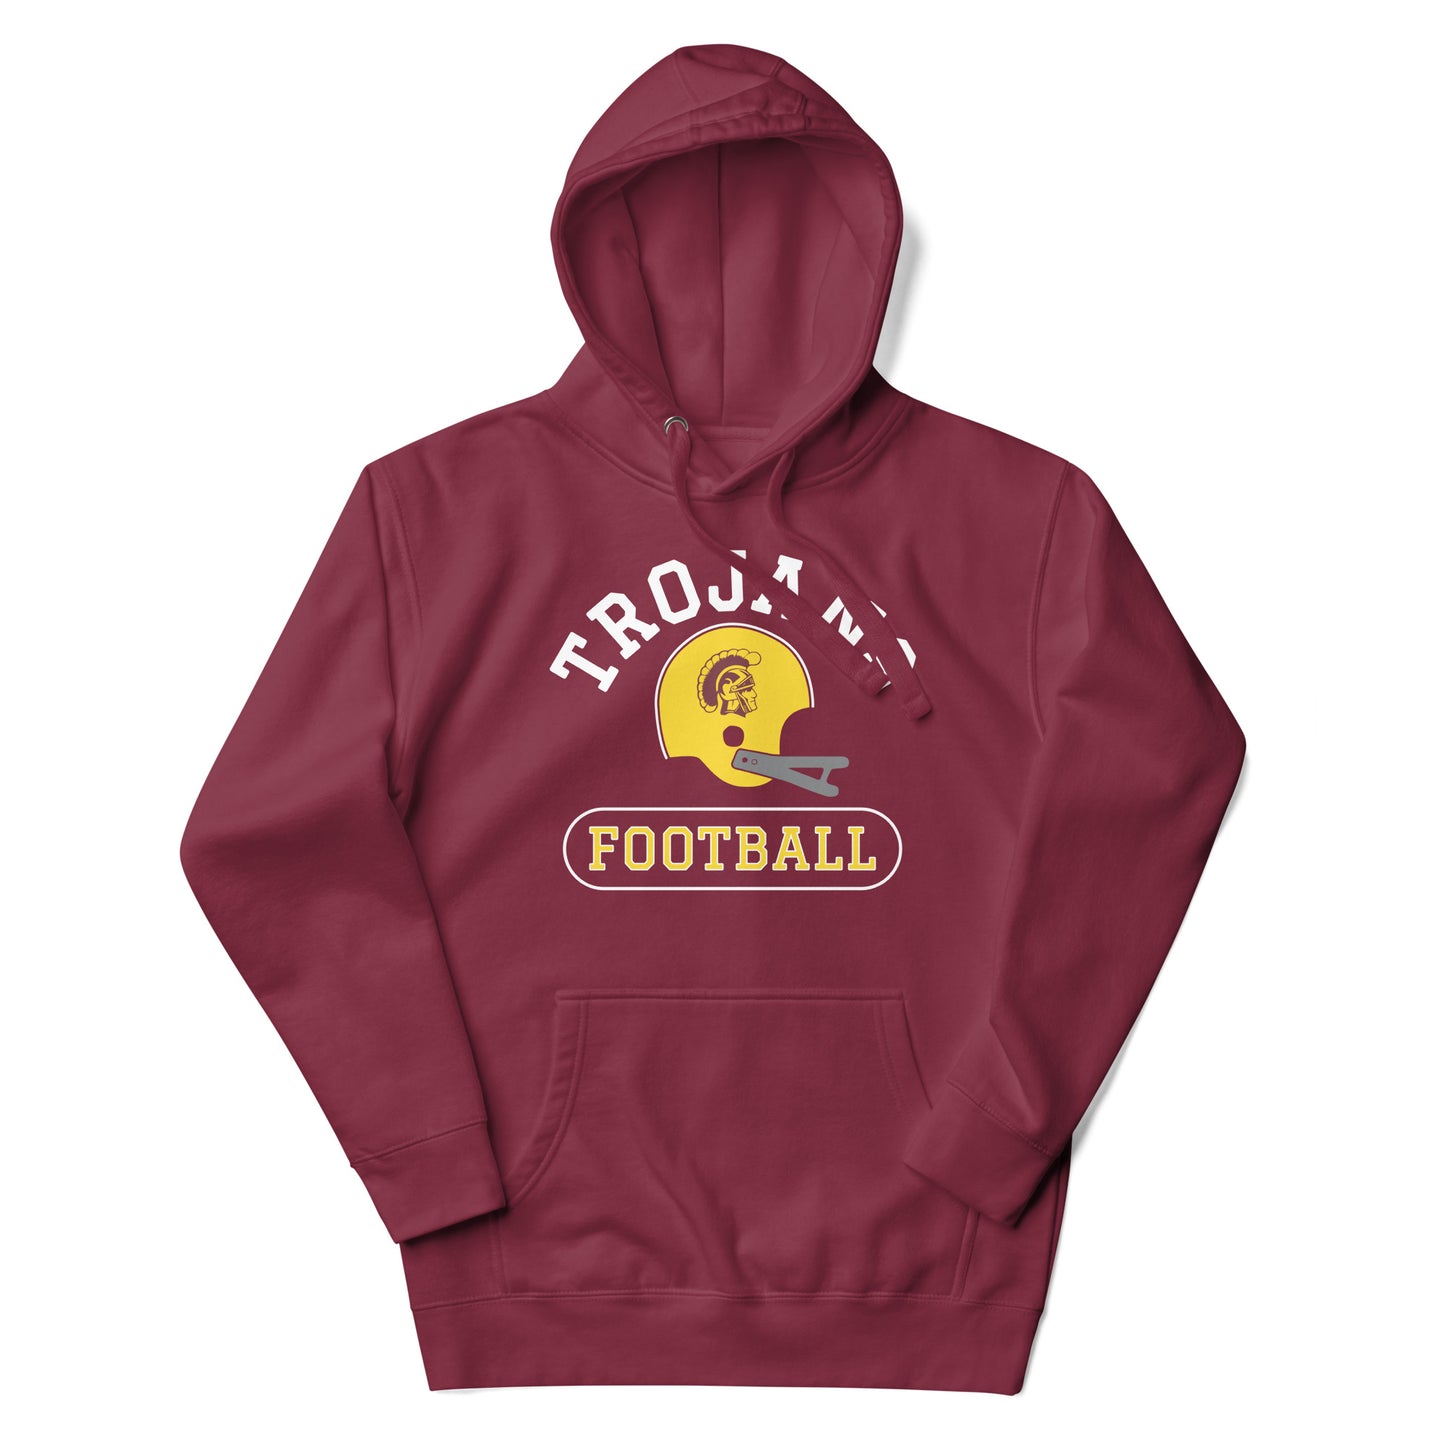 Trojans Football Vintage Hoodie